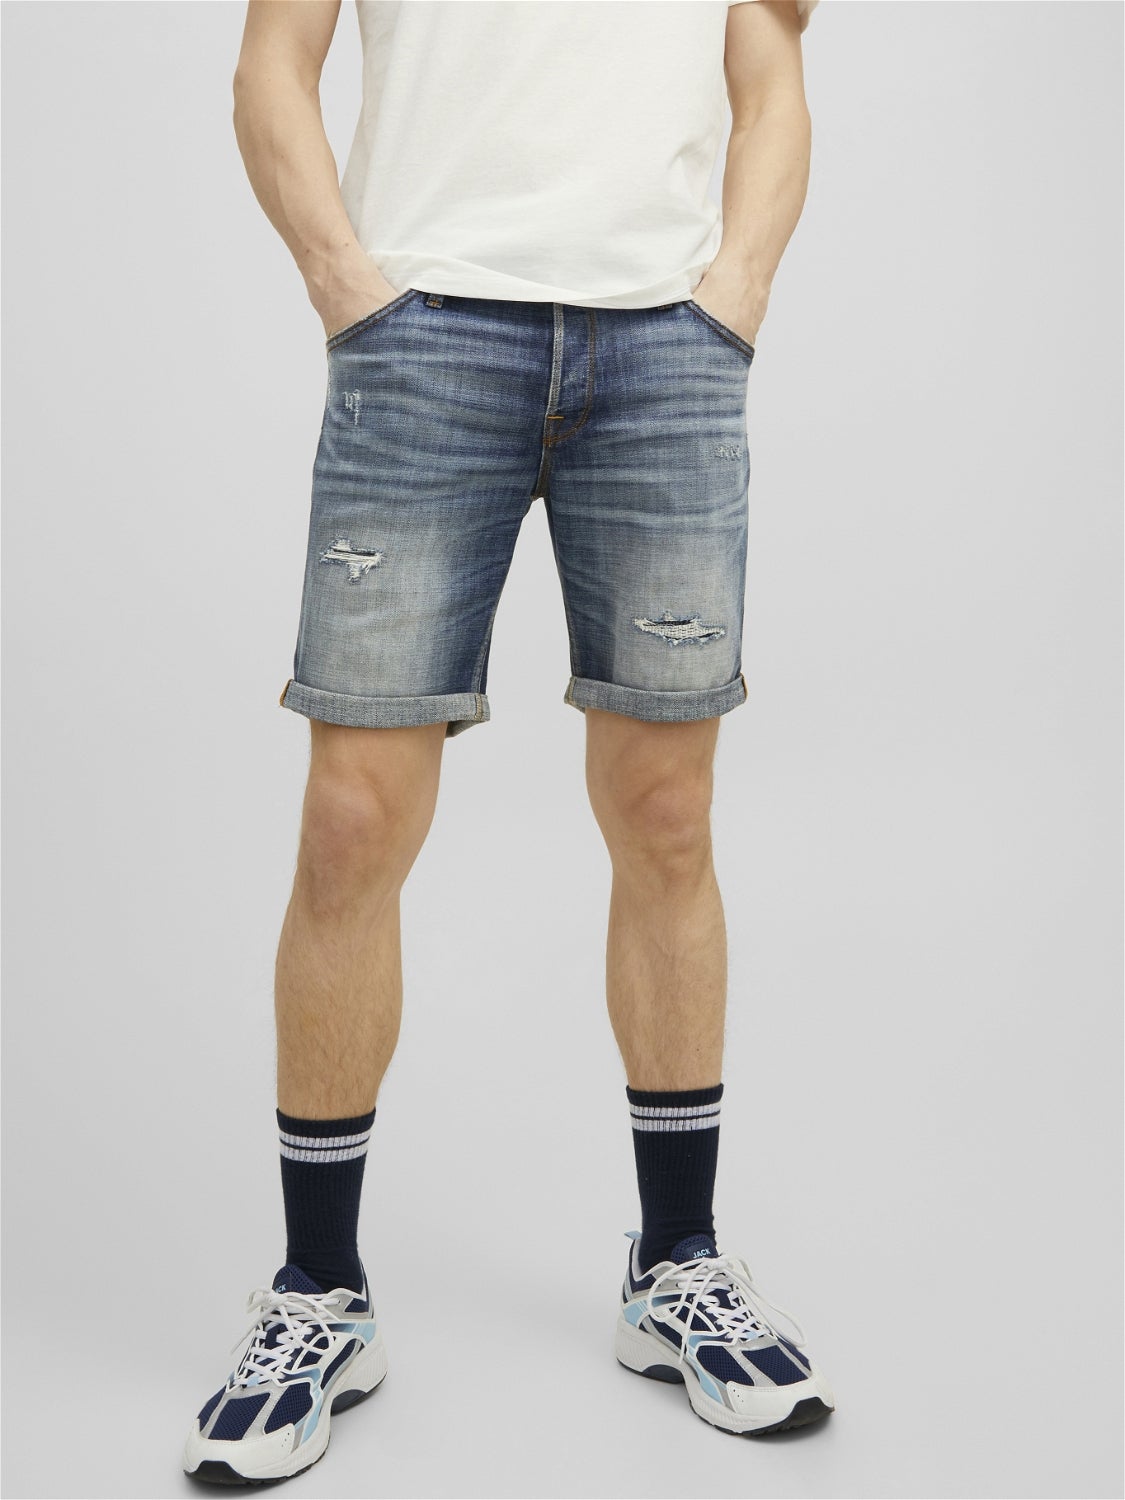 Jack & Jones Shorts jeans HERREN Jeans NO STYLE Rabatt 62 % Grau L 